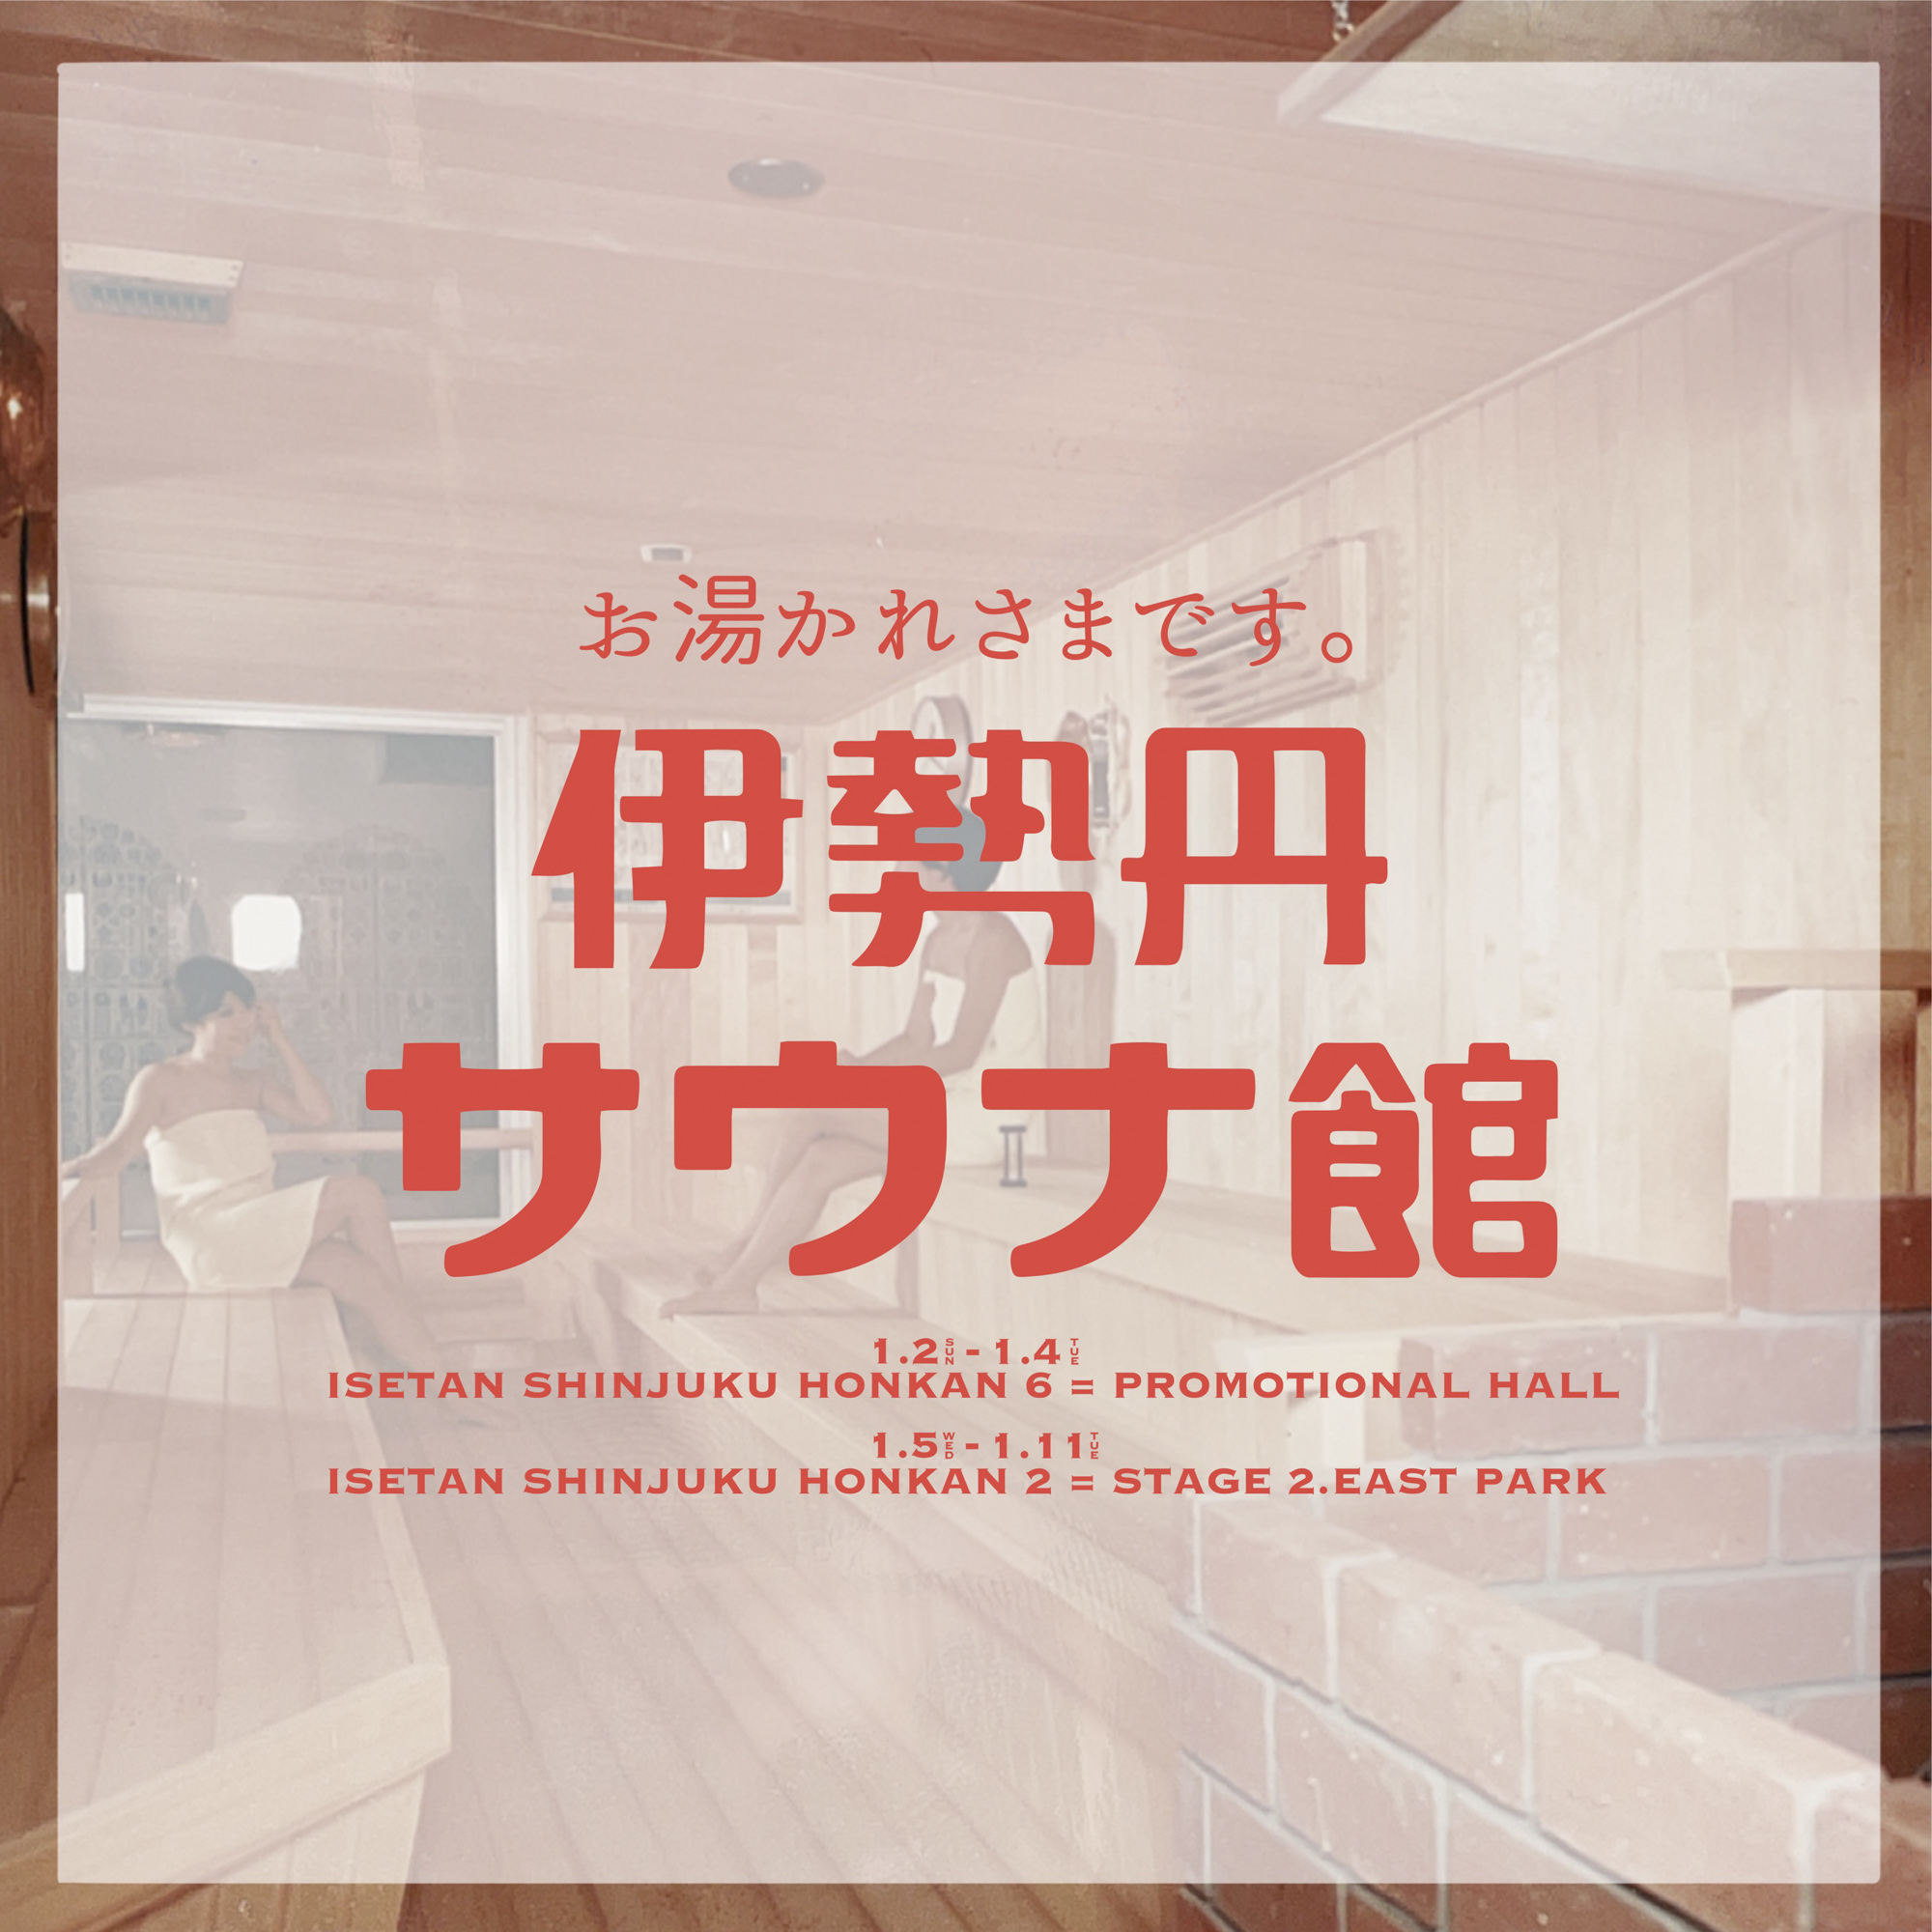 SHISEIDO MEN」サウナがテーマのポップアップを伊勢丹新宿店メンズ館で開催